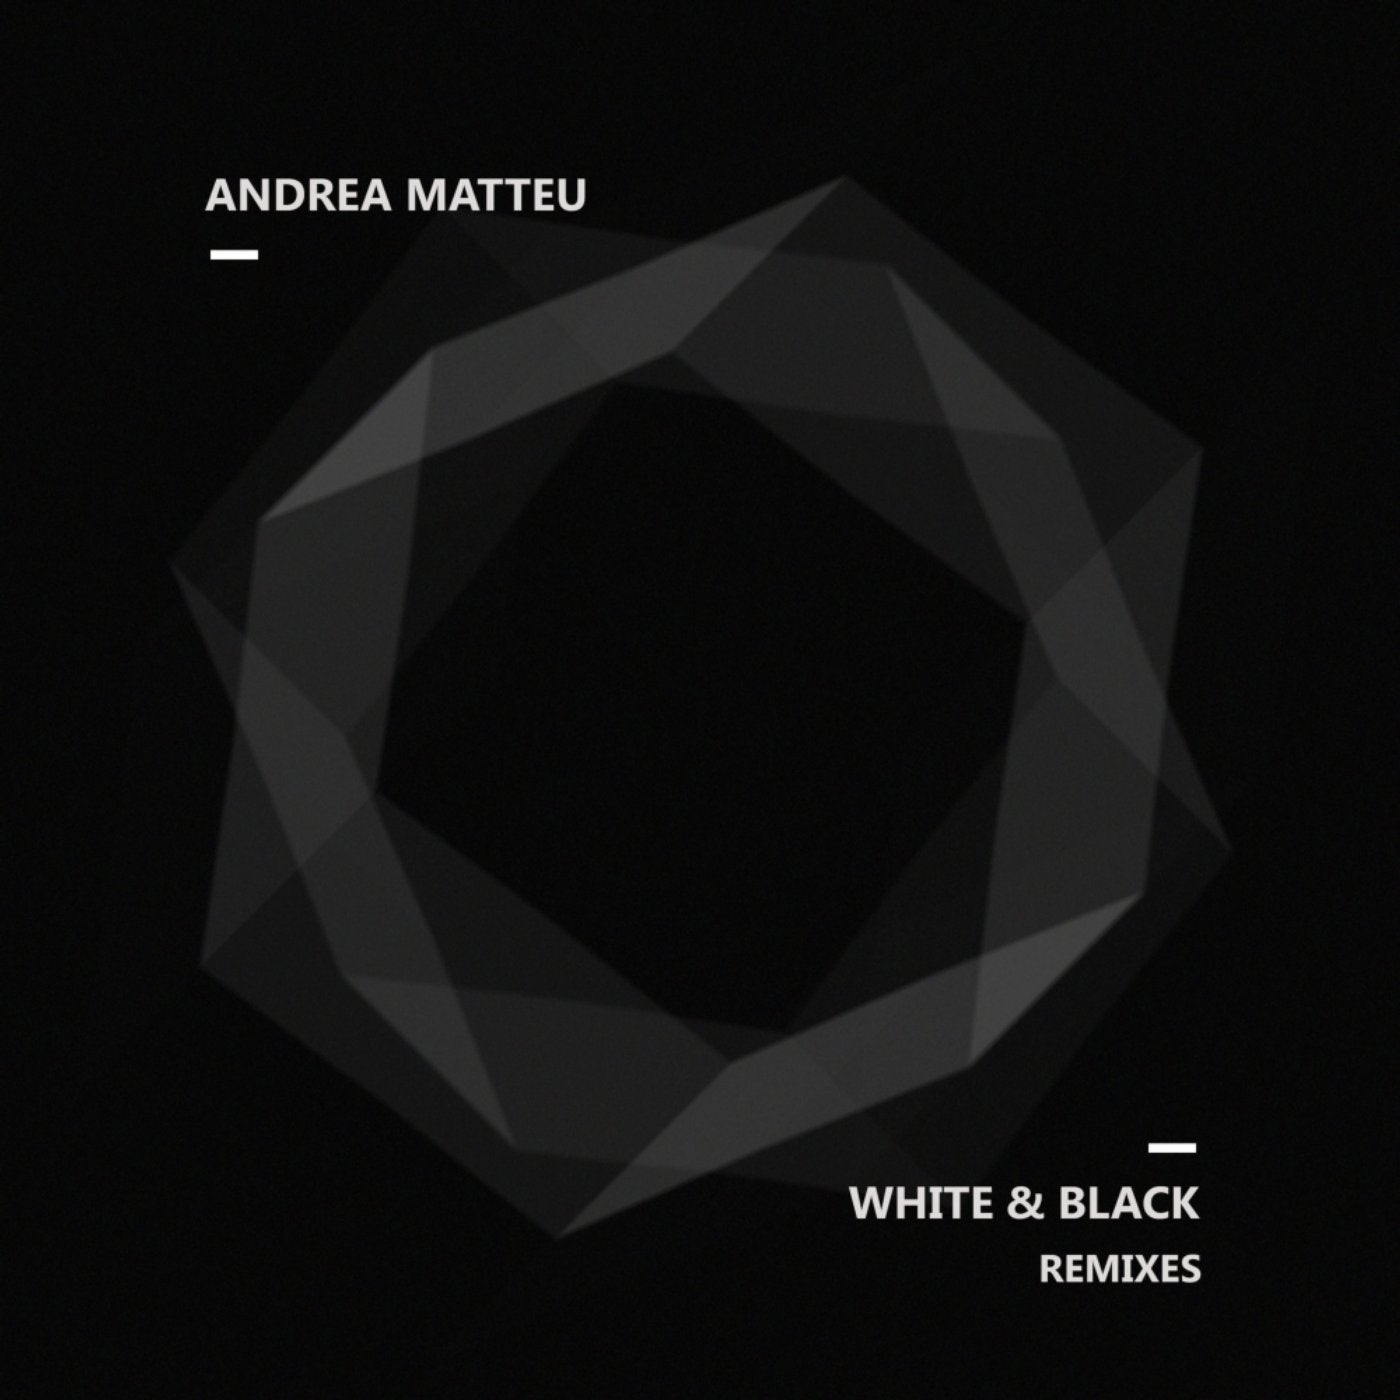 White & Black Remixes